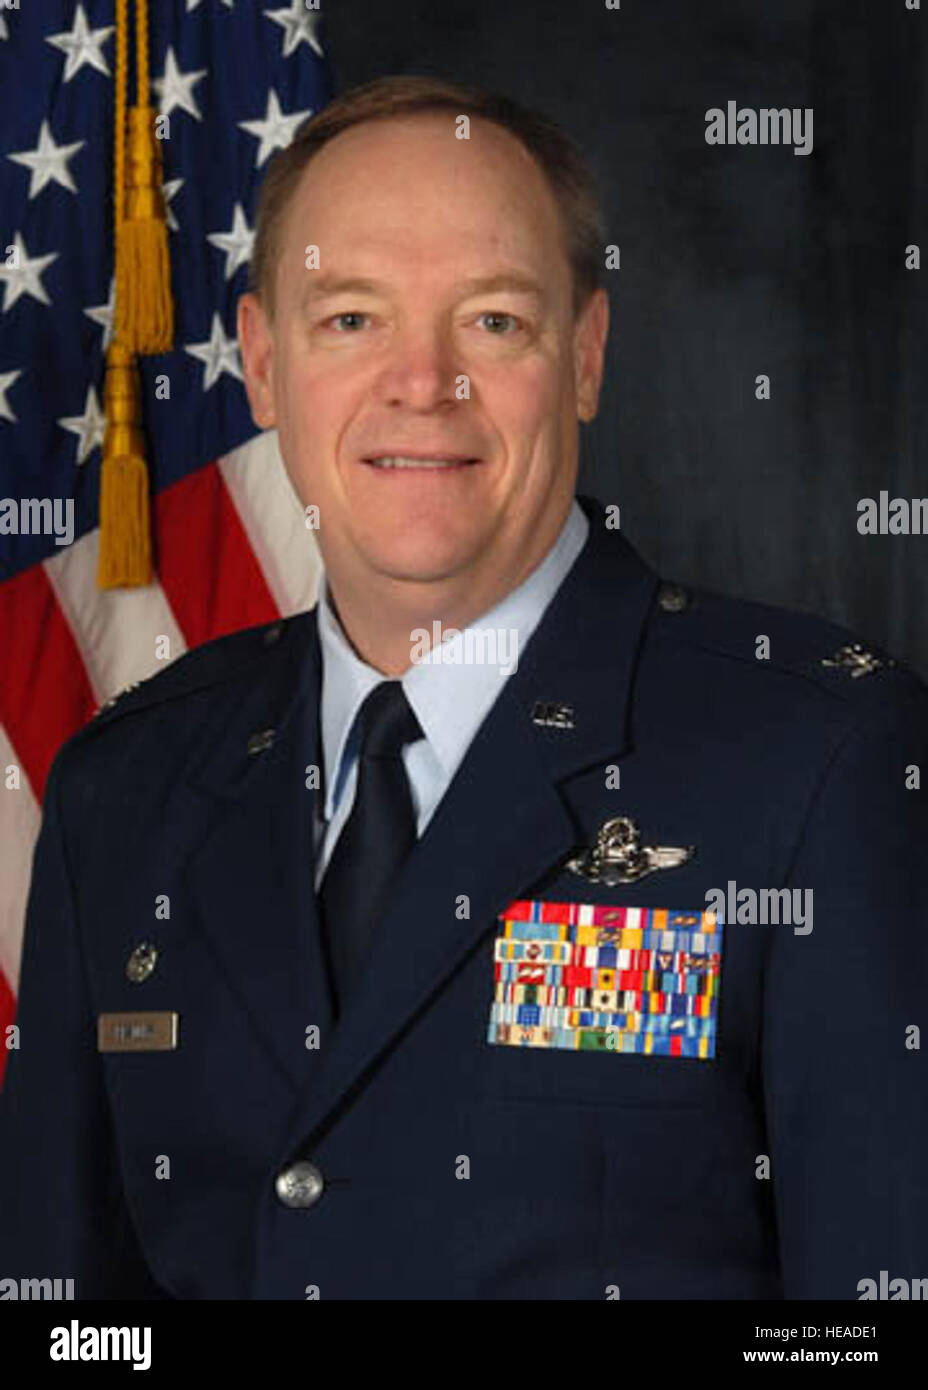 U.S. Air Force portrait shows Col. Kevin Bradley. Stock Photo